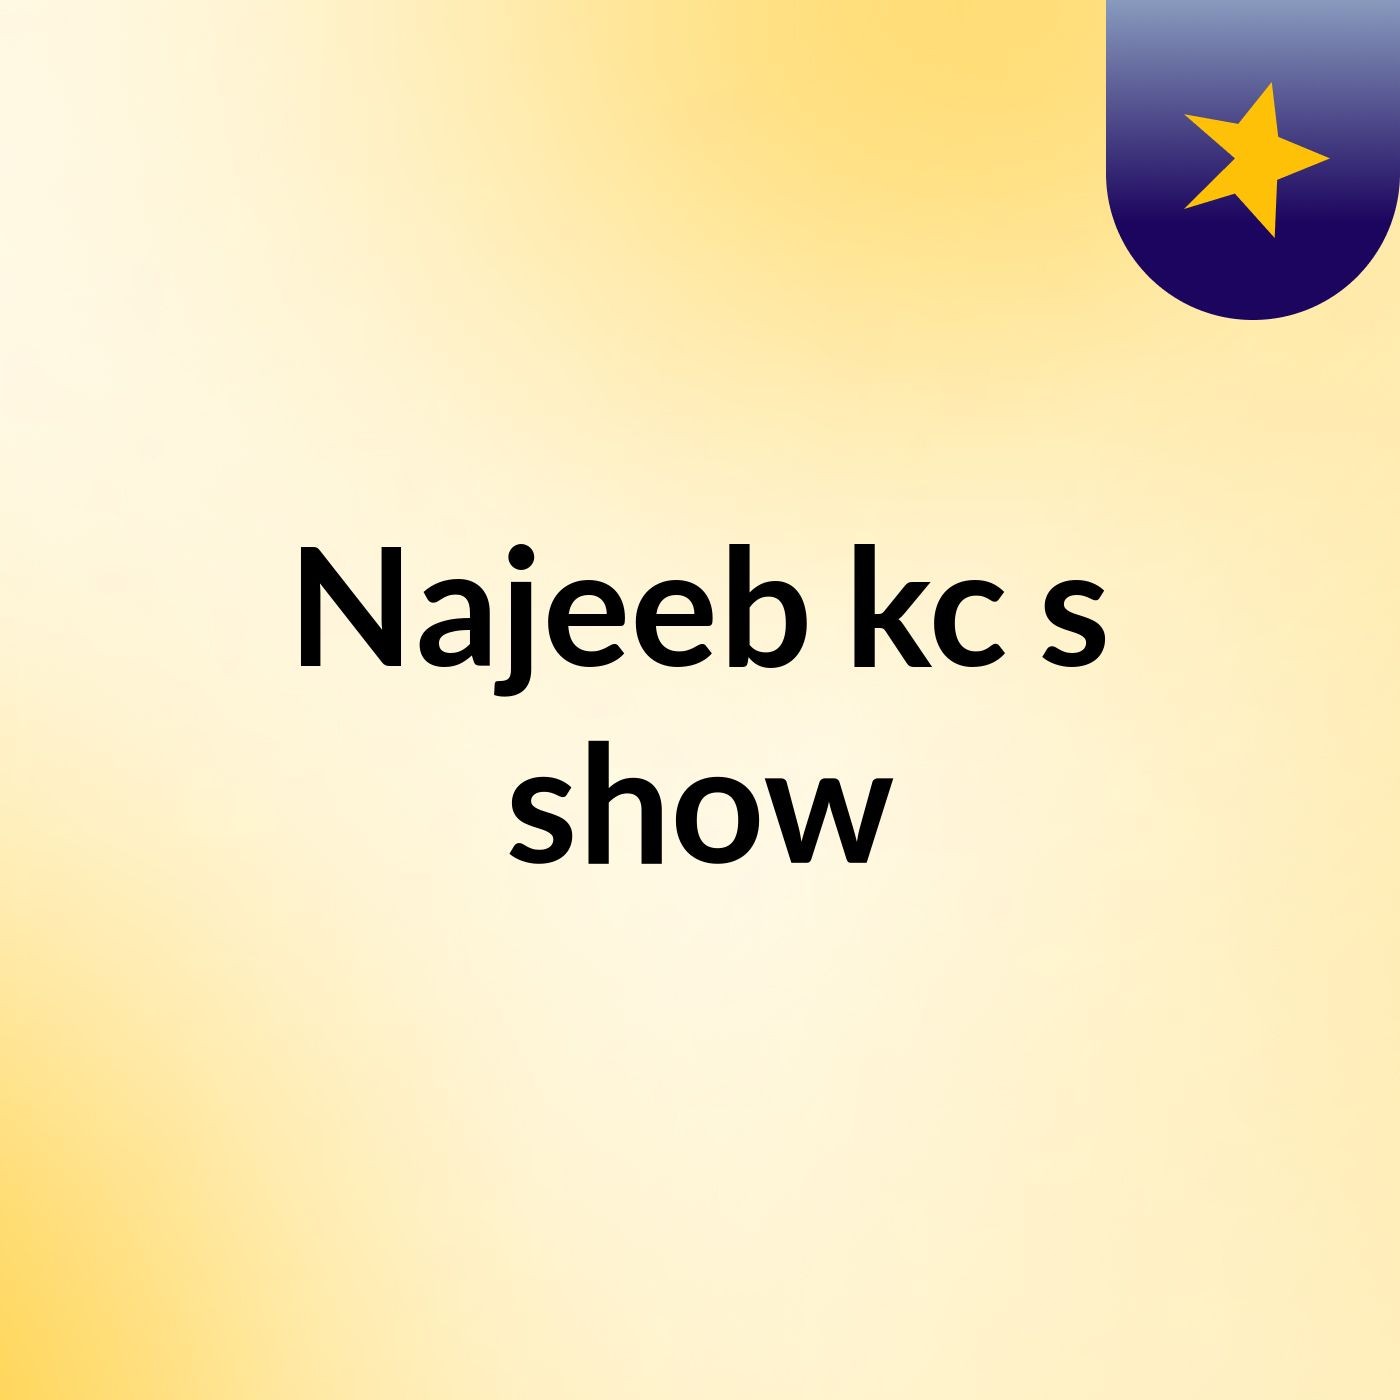 Najeeb kc's show